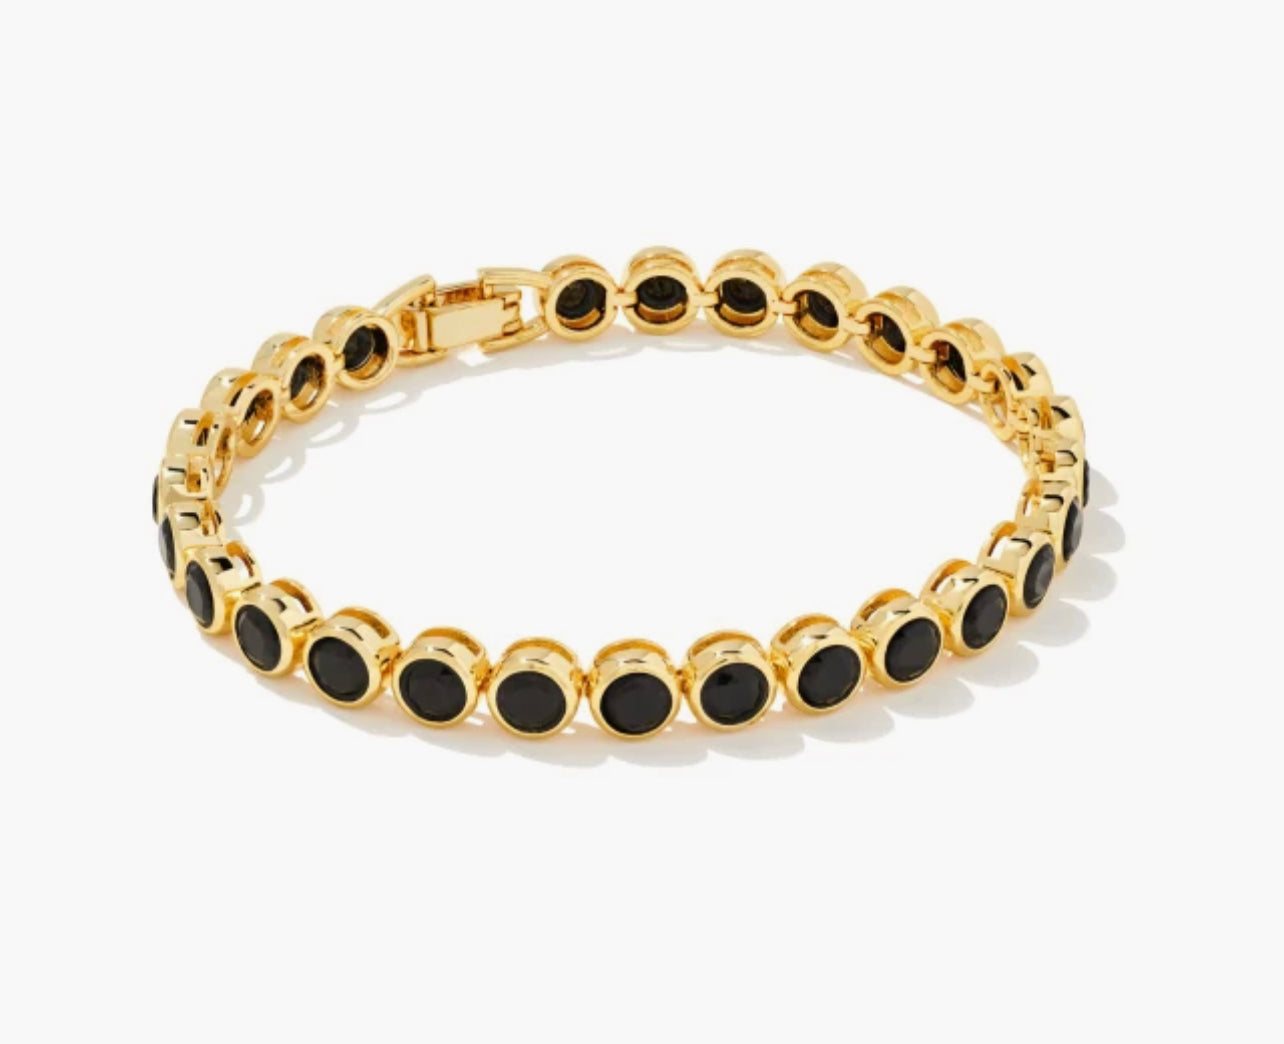 Kendra Scott-Carmen Gold Tennis Bracelet in Black Spinel 9608803040